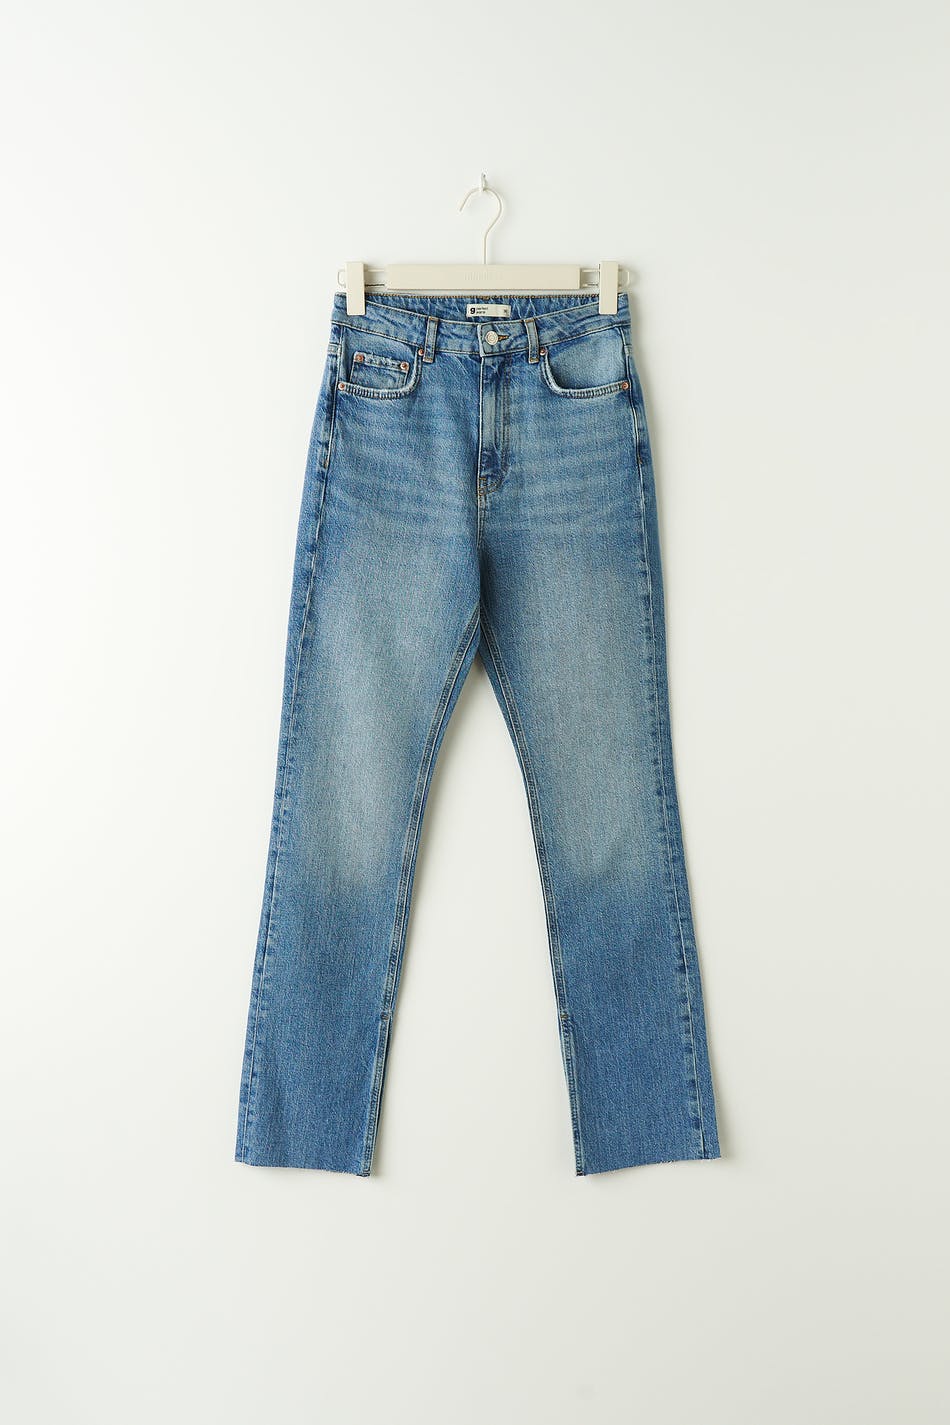 High waist petite slit jeans, Gina Tricot